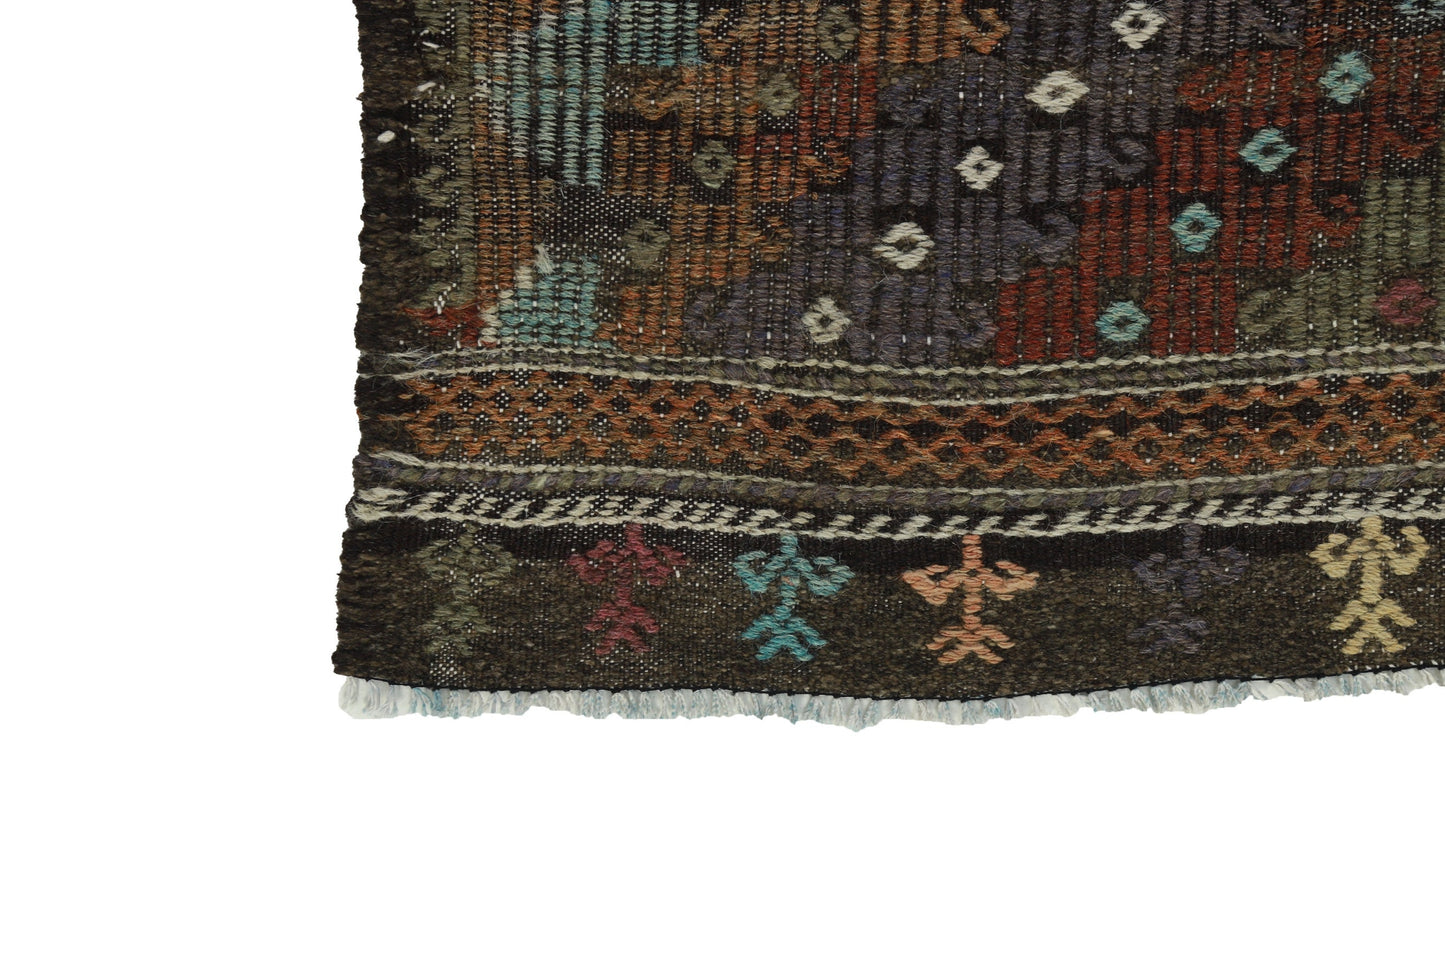 Kilim rug Terracotta, Turkish Kilim rug Eclectic ,One of a kind Vintage Kilim Rug ,Handmade Kilim Rug, Area Rug 7x9, KiLİM RUG 7x9, 8179